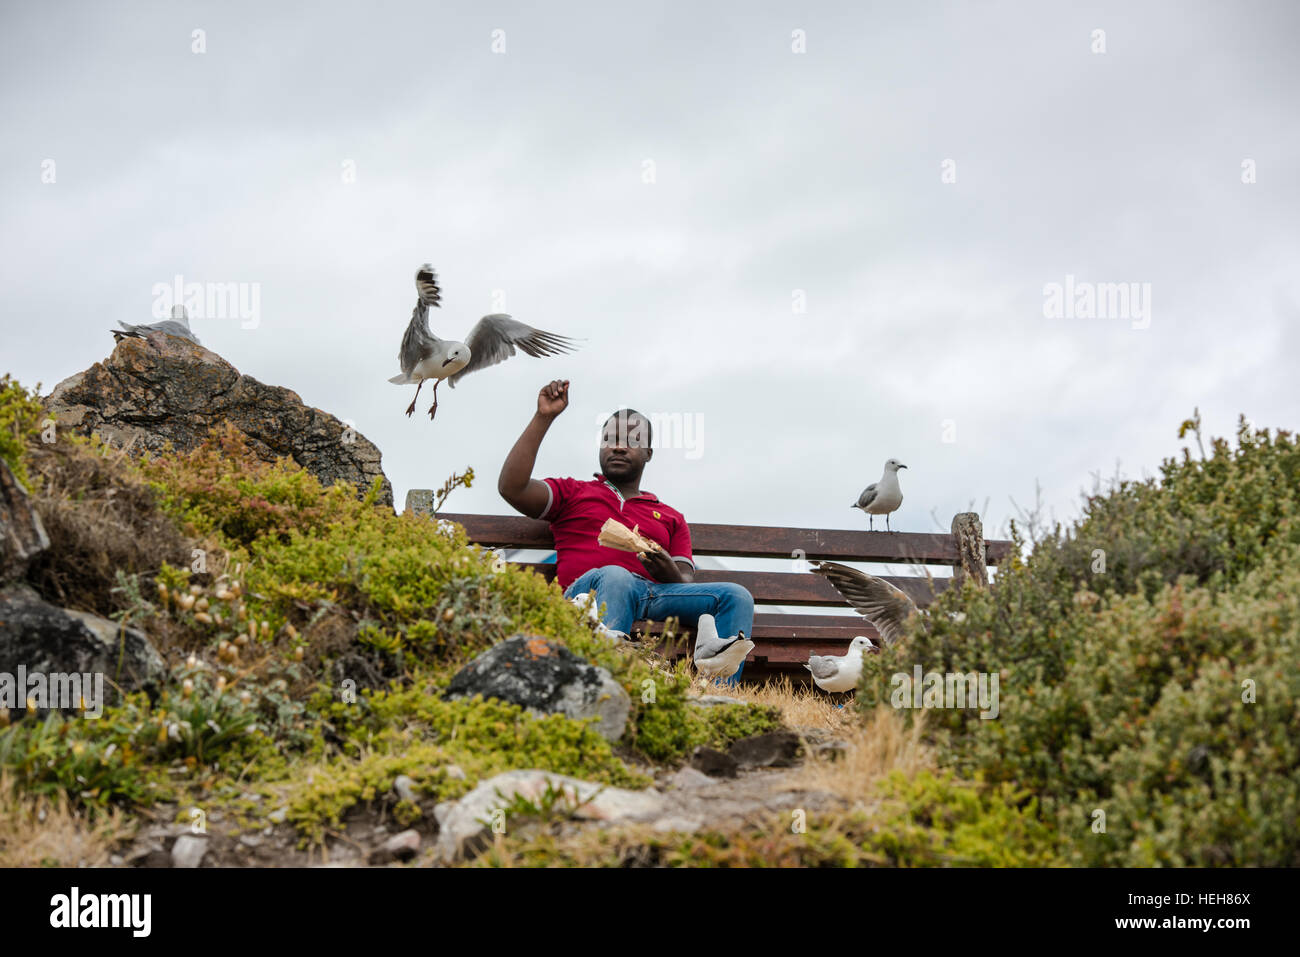 Man feeding seagulls at the coast Stock Photo